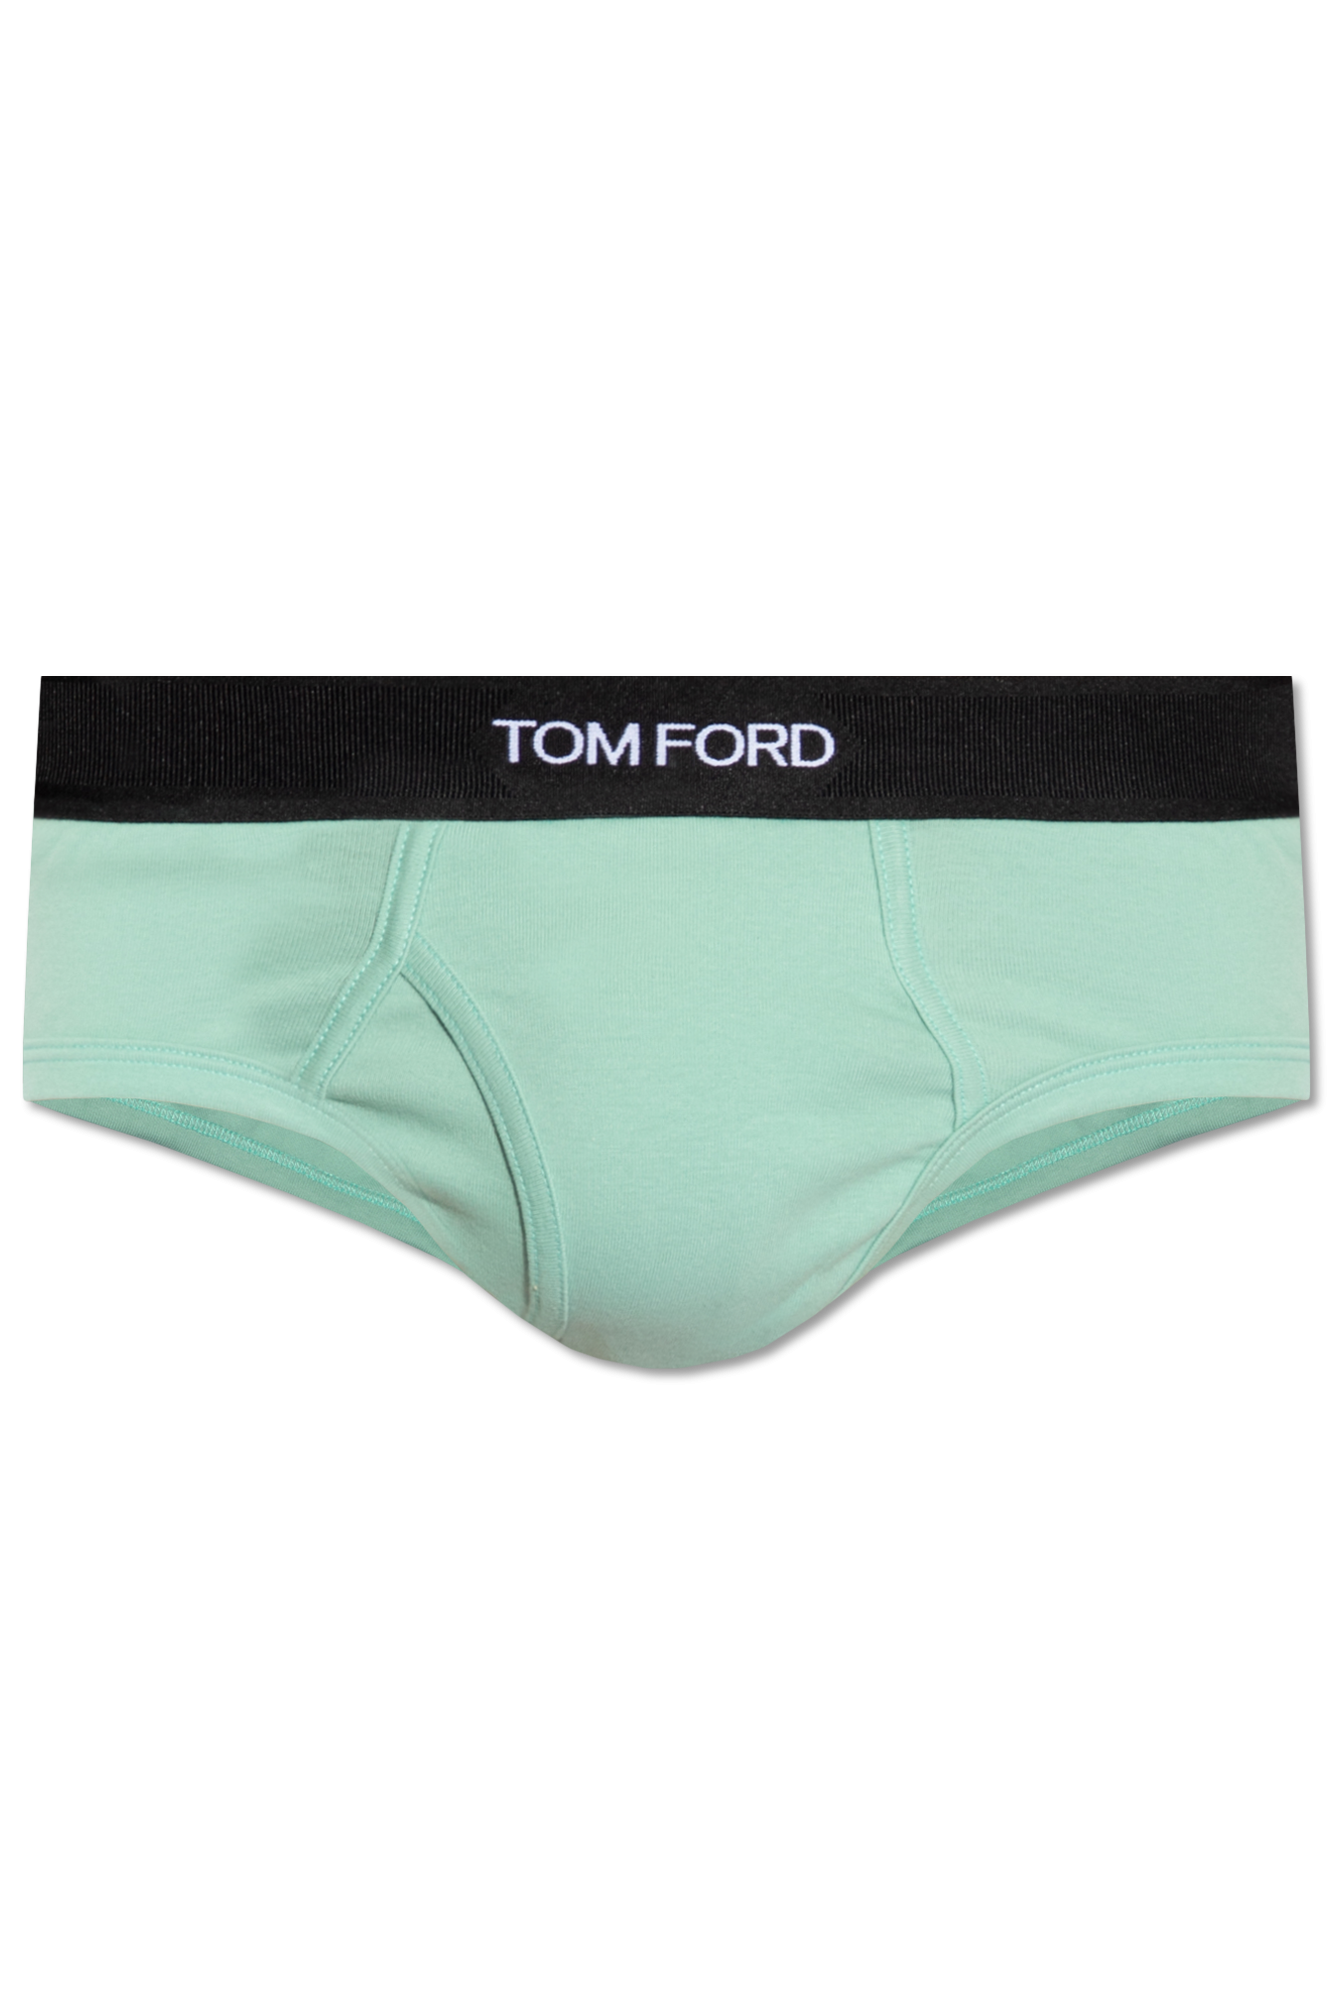 Tom Ford Cotton briefs